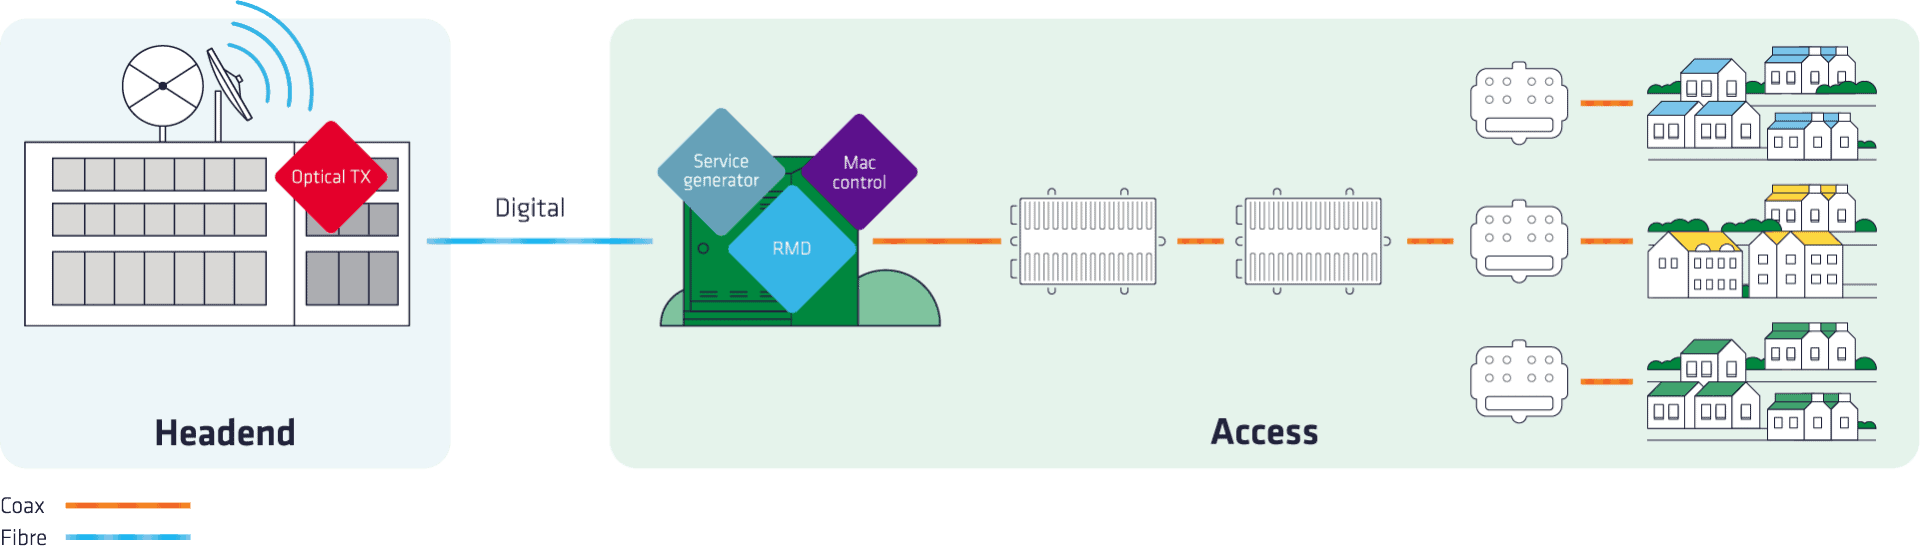 Distributed Access Architecture (DAA) Diagram